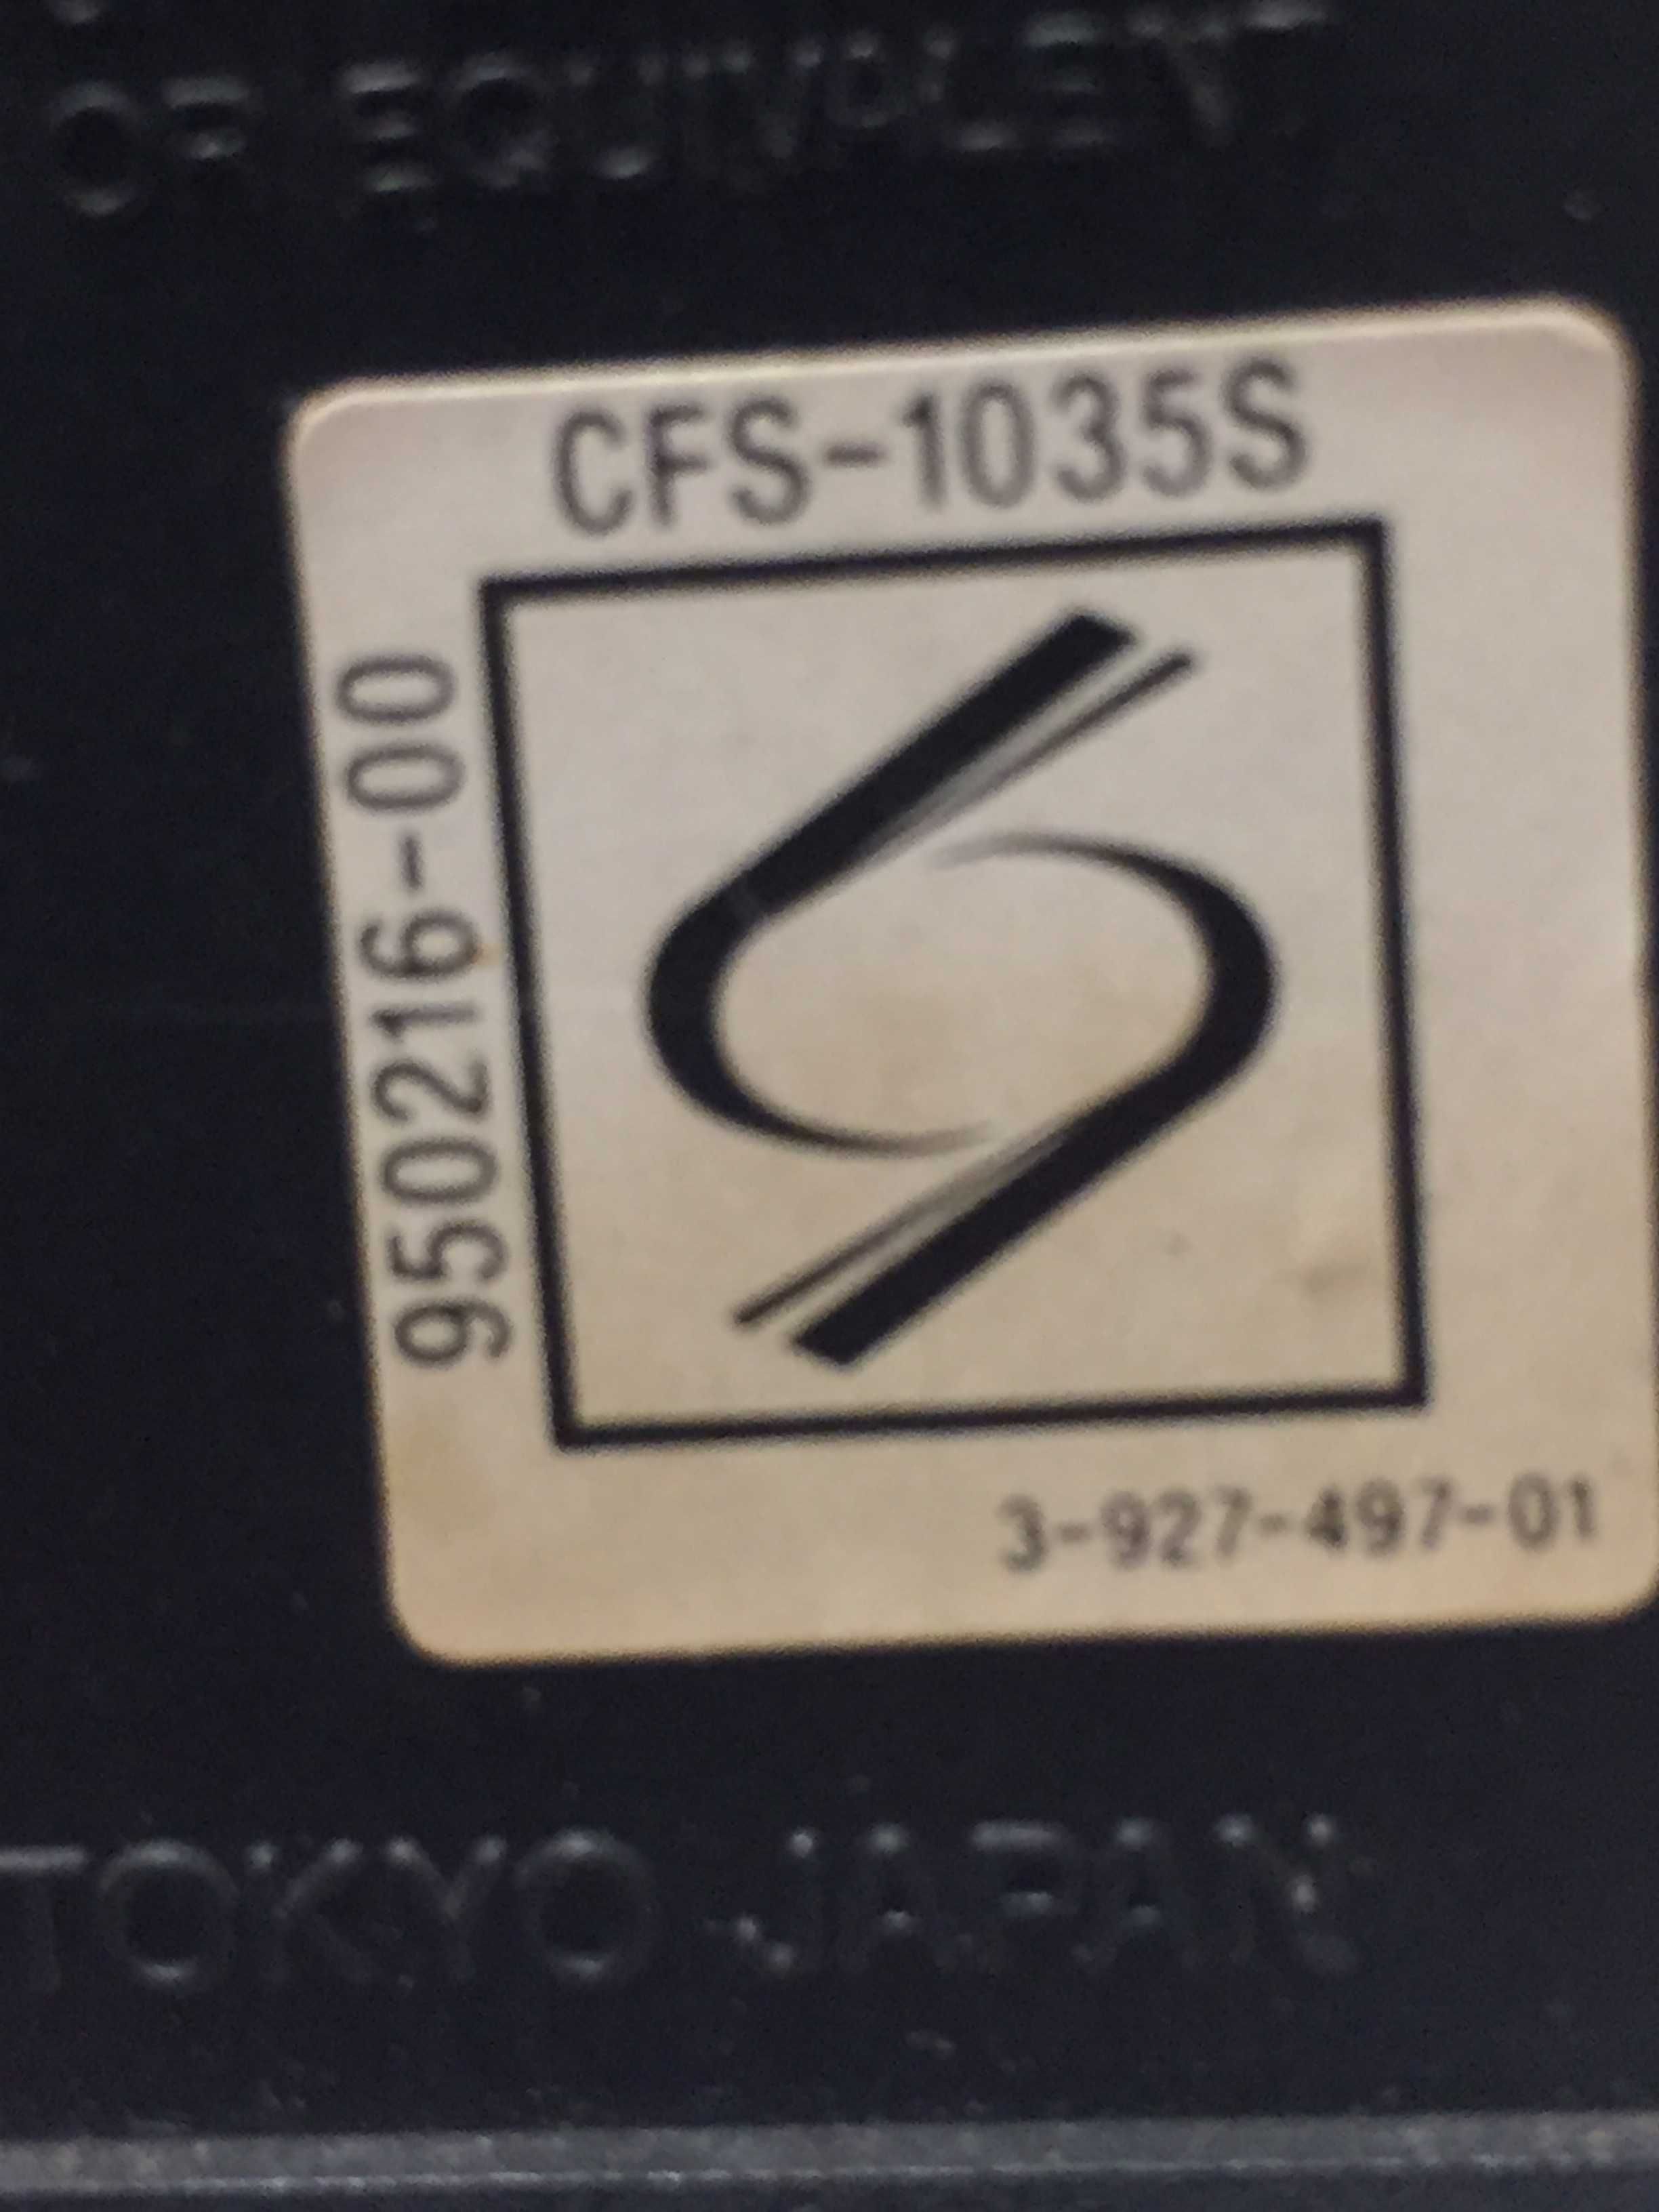 SONY Radio Cassette CFS-1035S, Japan, Antena Satelor super, FM  super